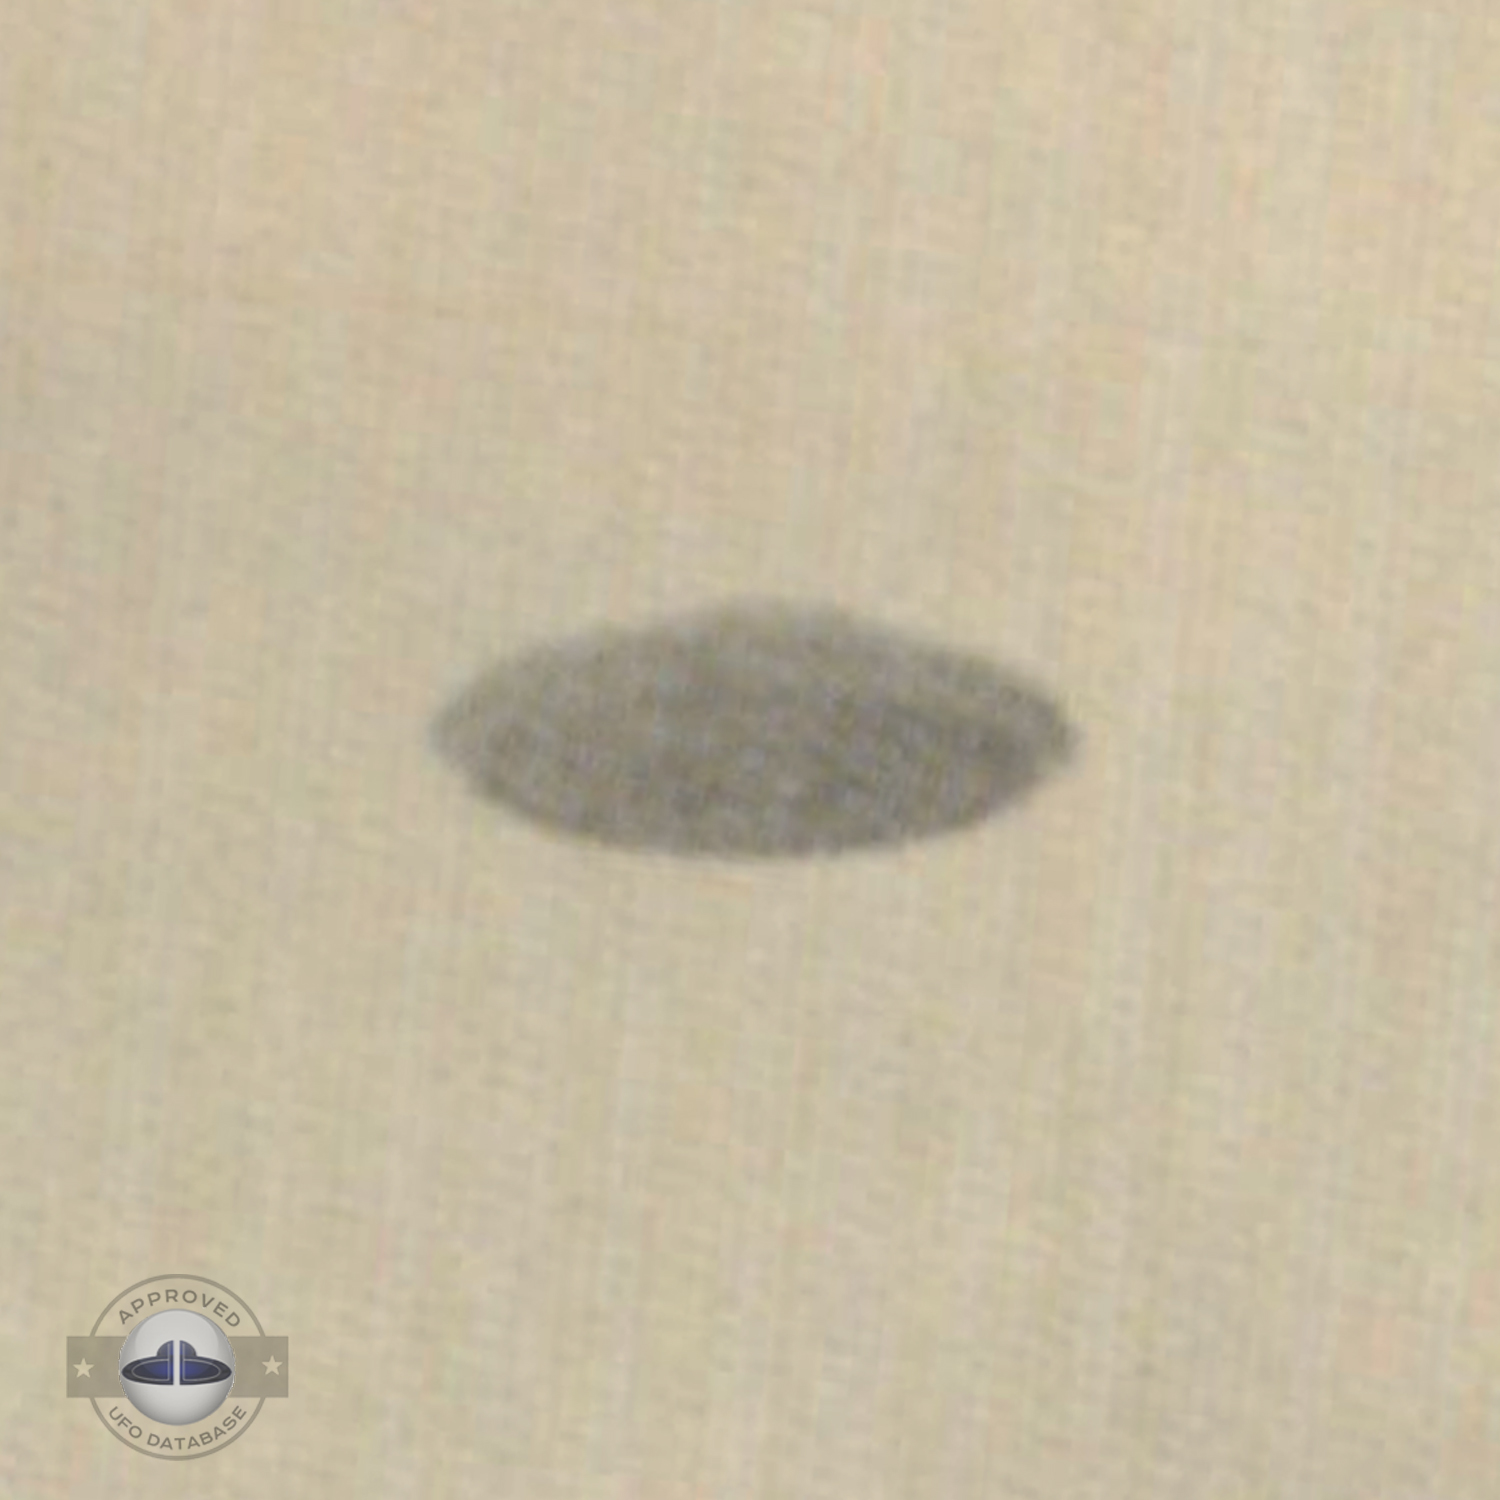 Billy Meier UFO Picture near Ashoka Ashram, Mehrauli India July 1964 UFO Picture #144-4